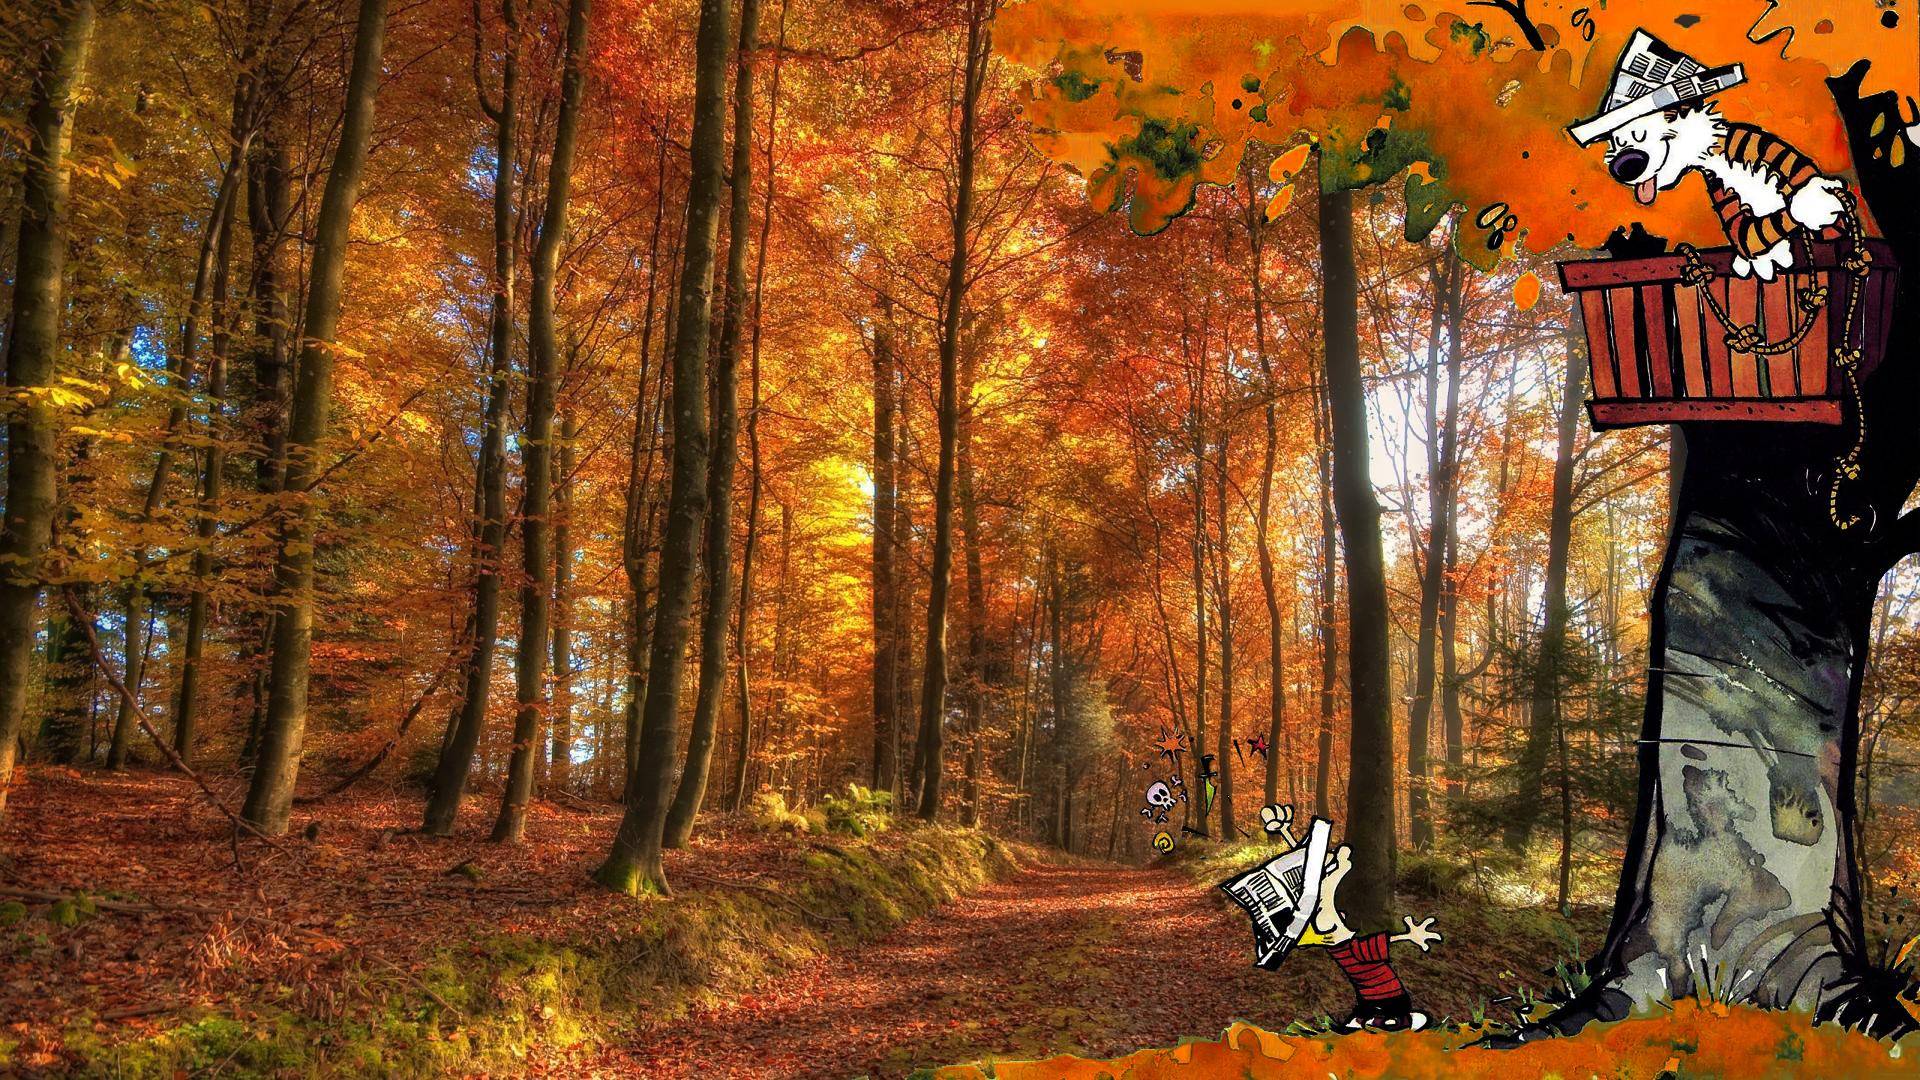 Calvin and hobbes comics autumn forest wallpaper | 1920x1080 ...